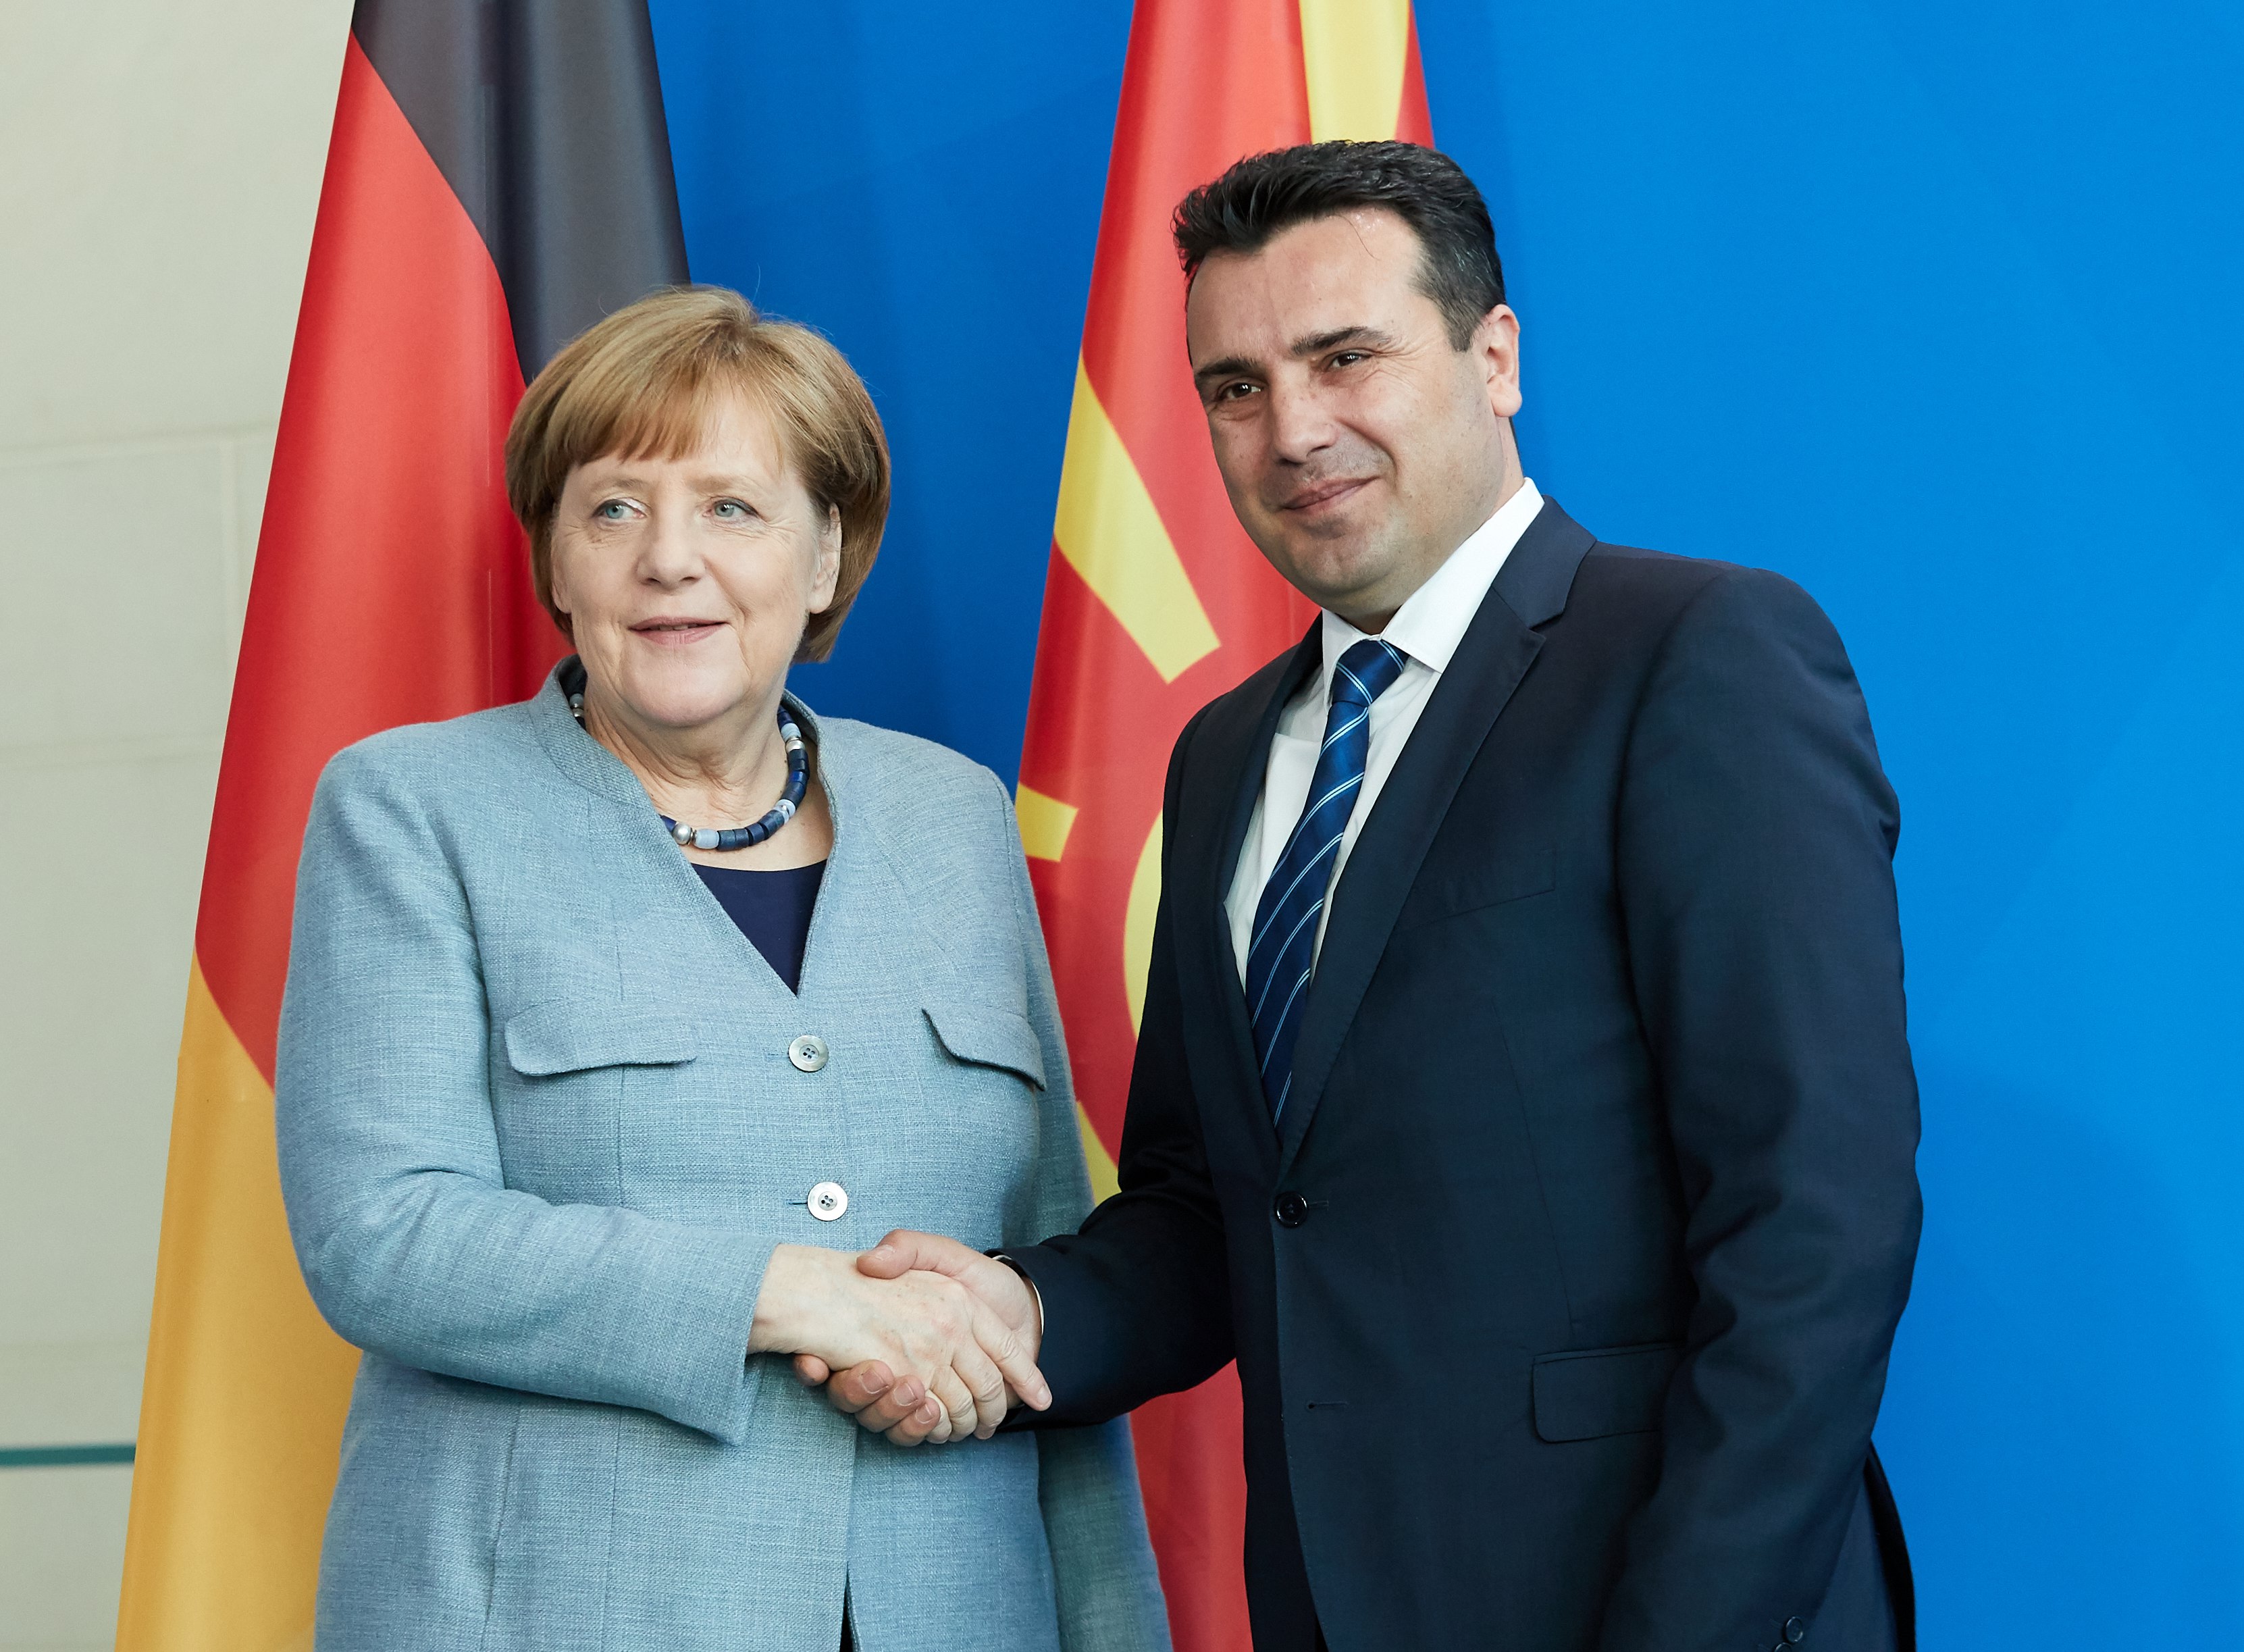 Zaev extols Tsipras, declares FYROM has no irredentist claims against Greece